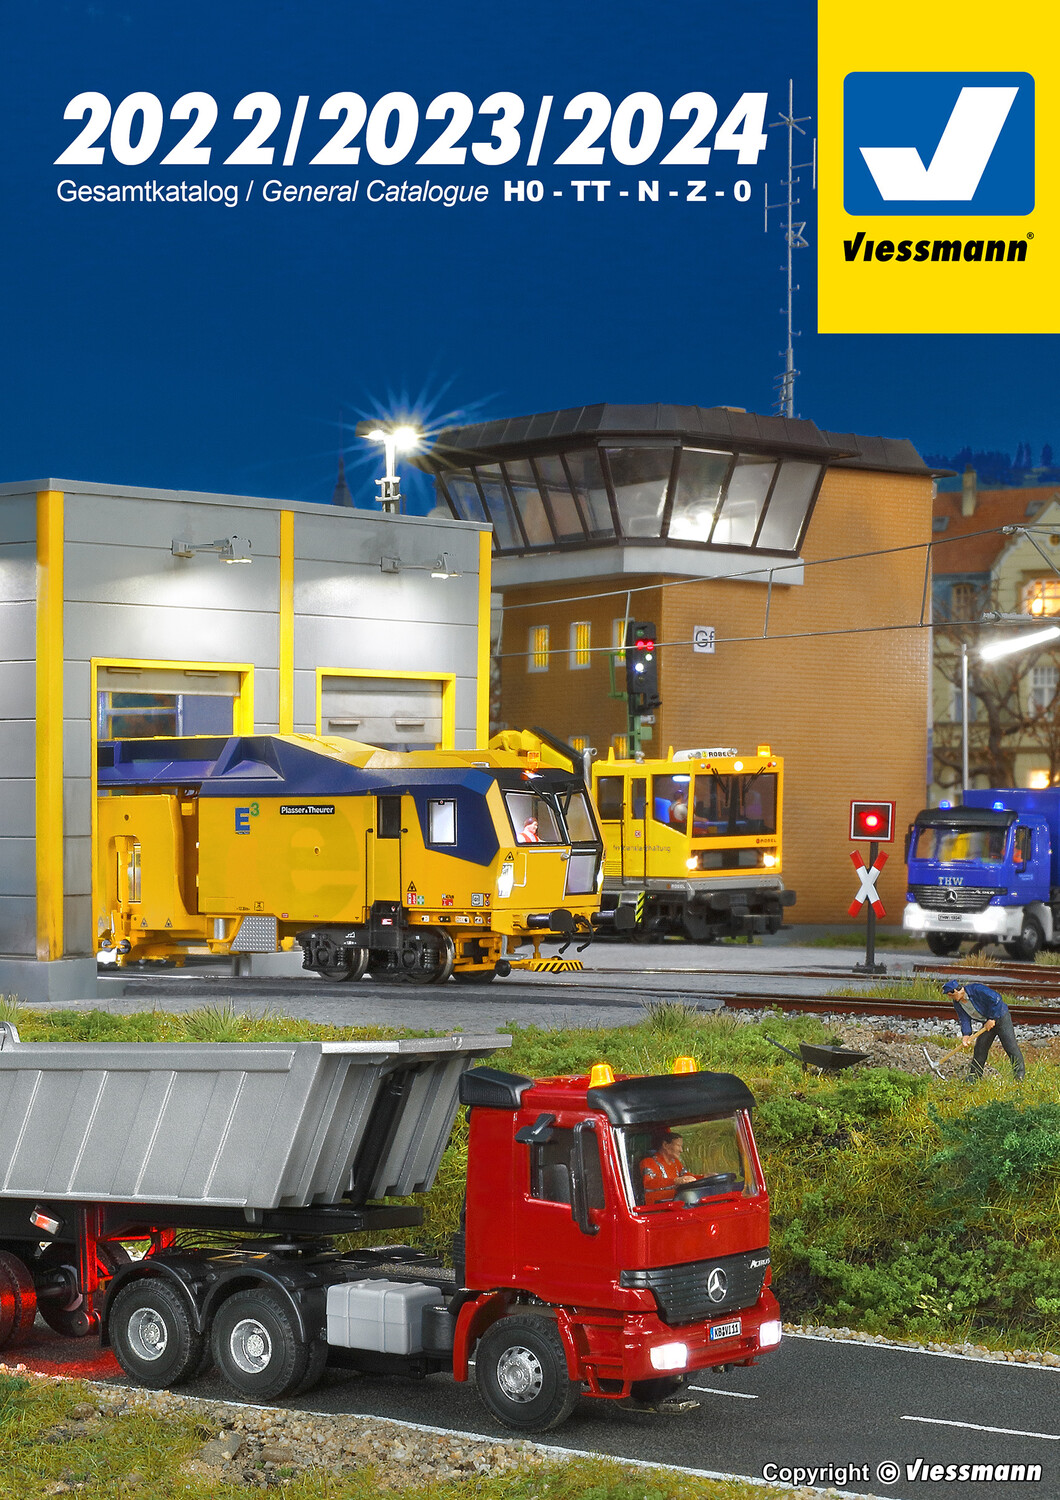 Viessmann 8999 Viessmann Katalog 2019/2020/2021 DE/EN 